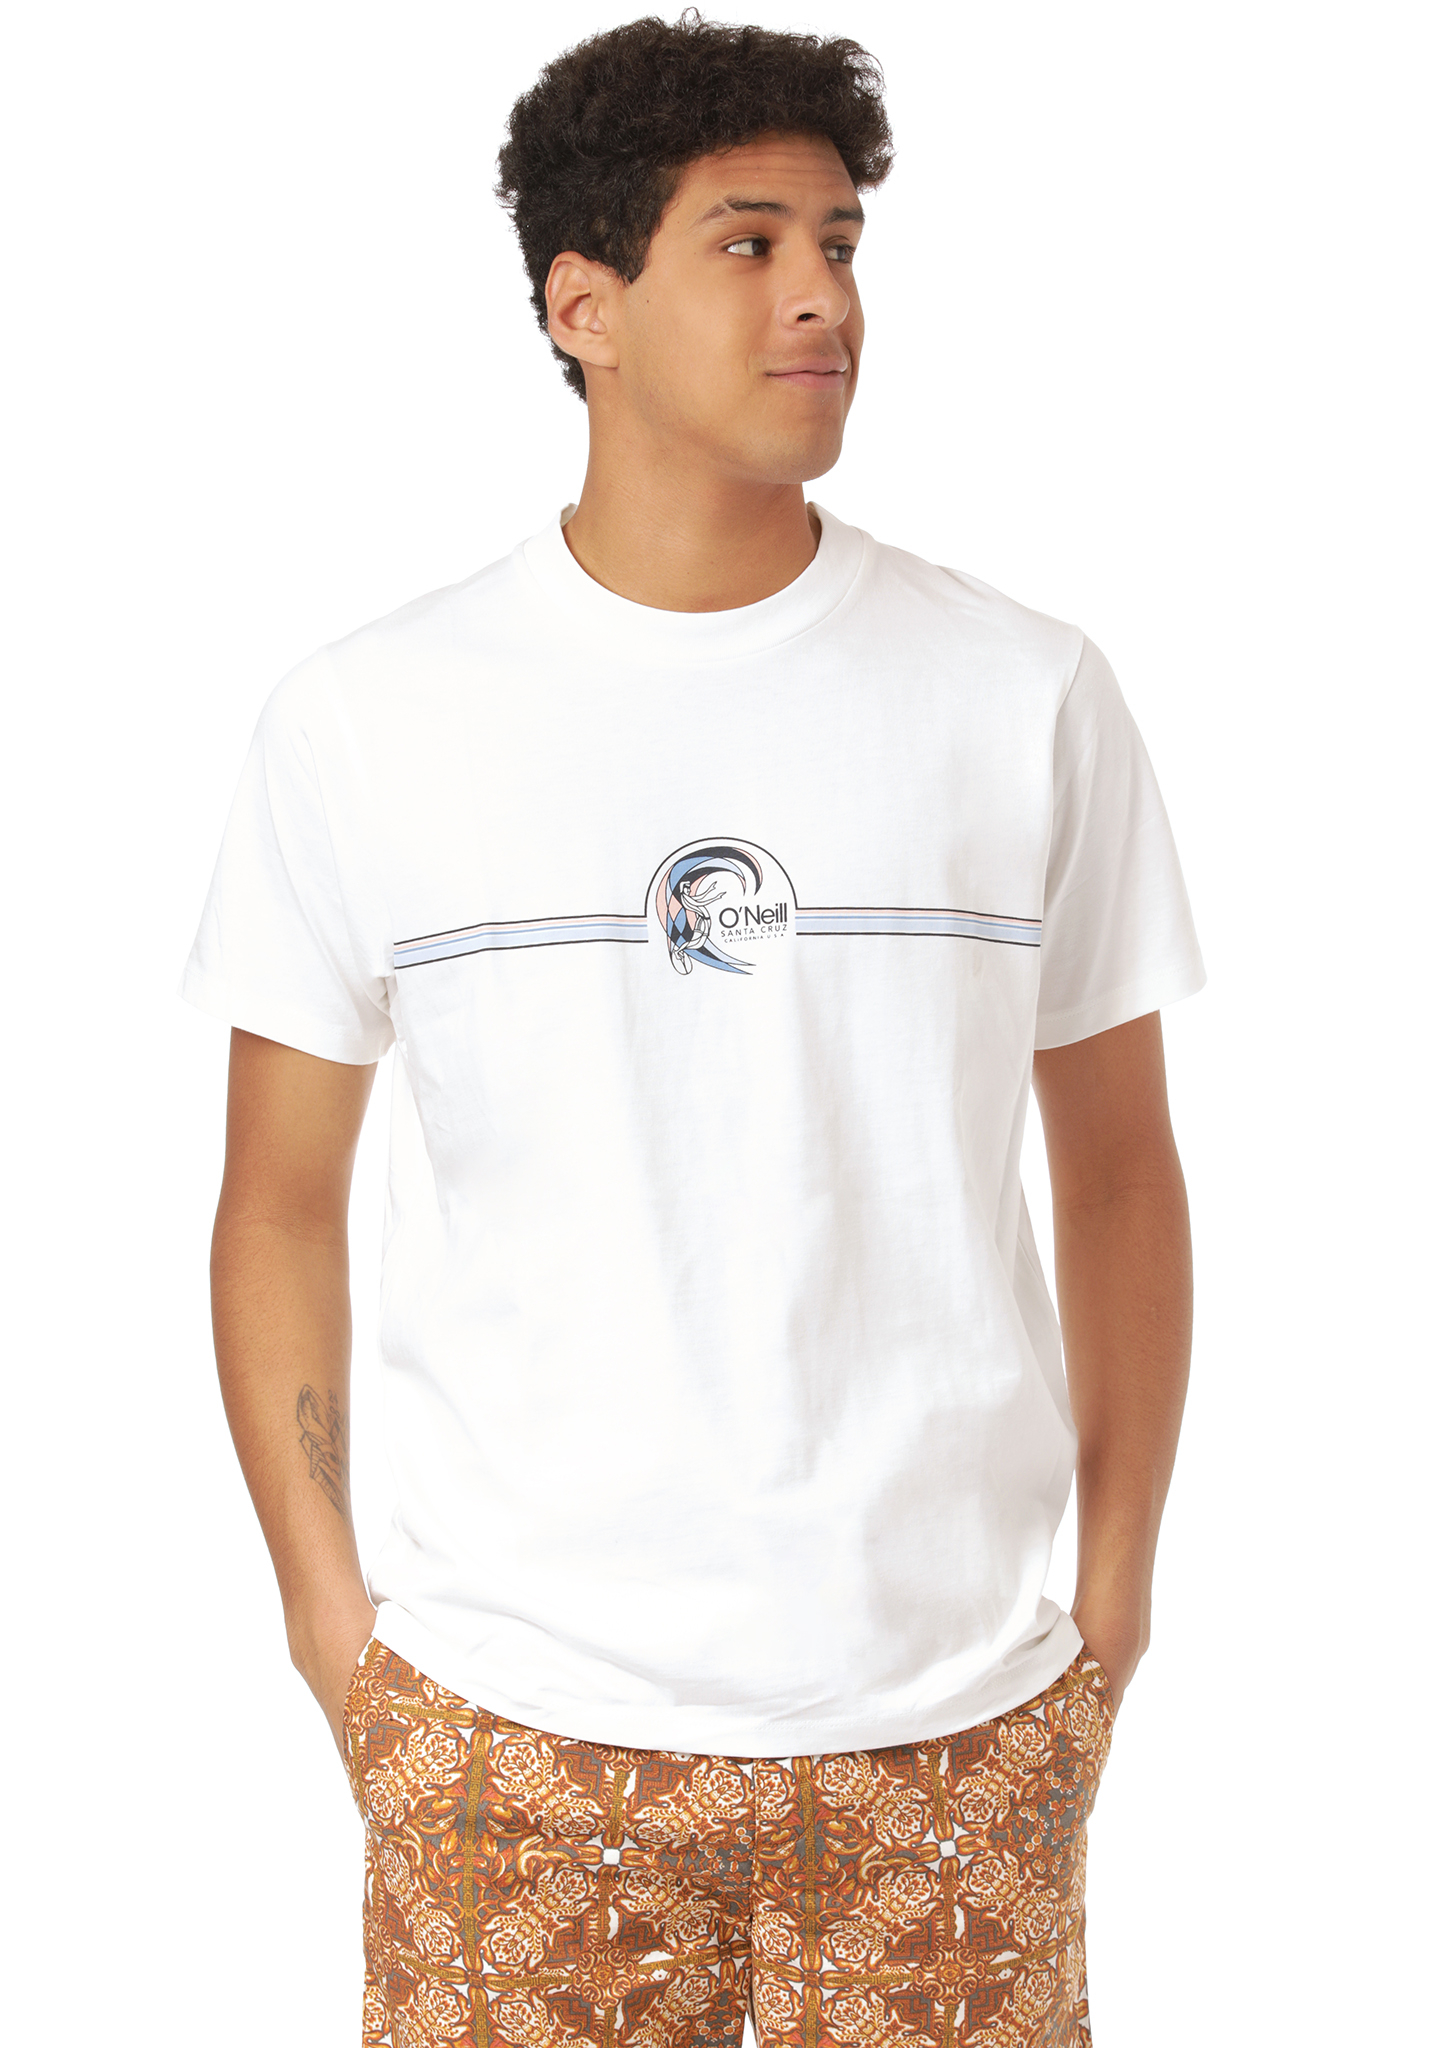 O'Neill Center Surfer T-Shirt powder white XS